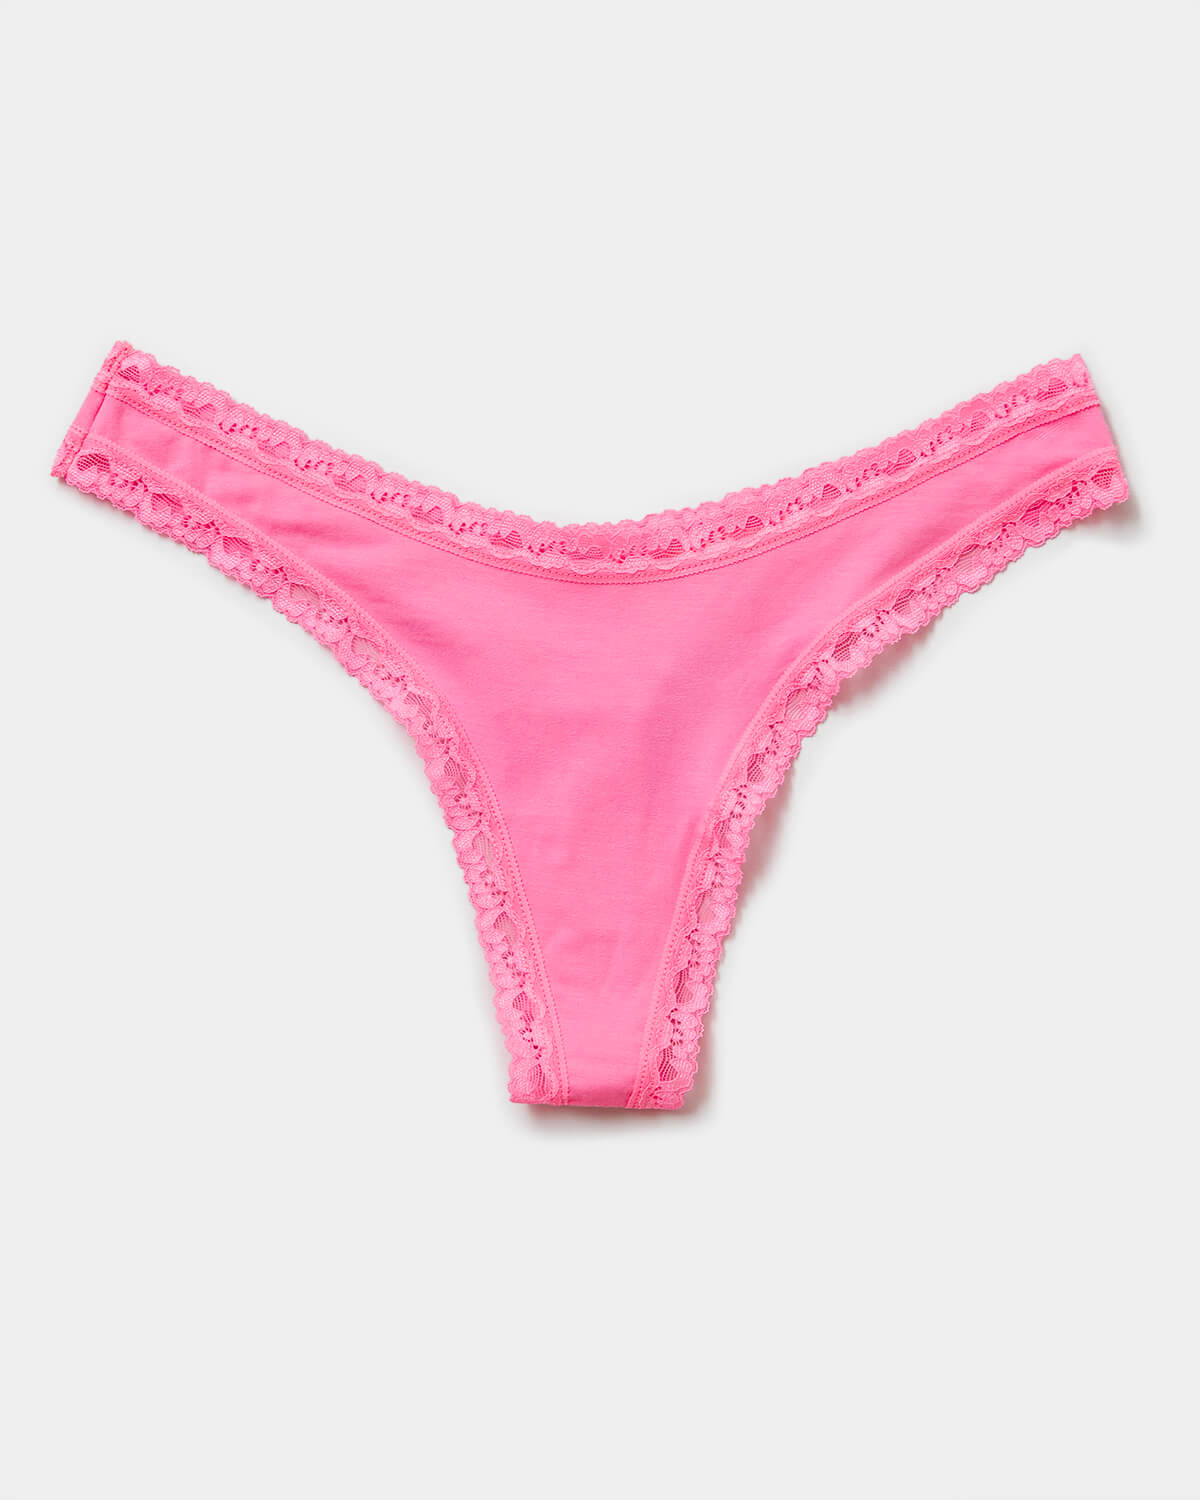 Victoria's Secret Get T-shirt bra and panties at special price, Singapore  Apr 2023